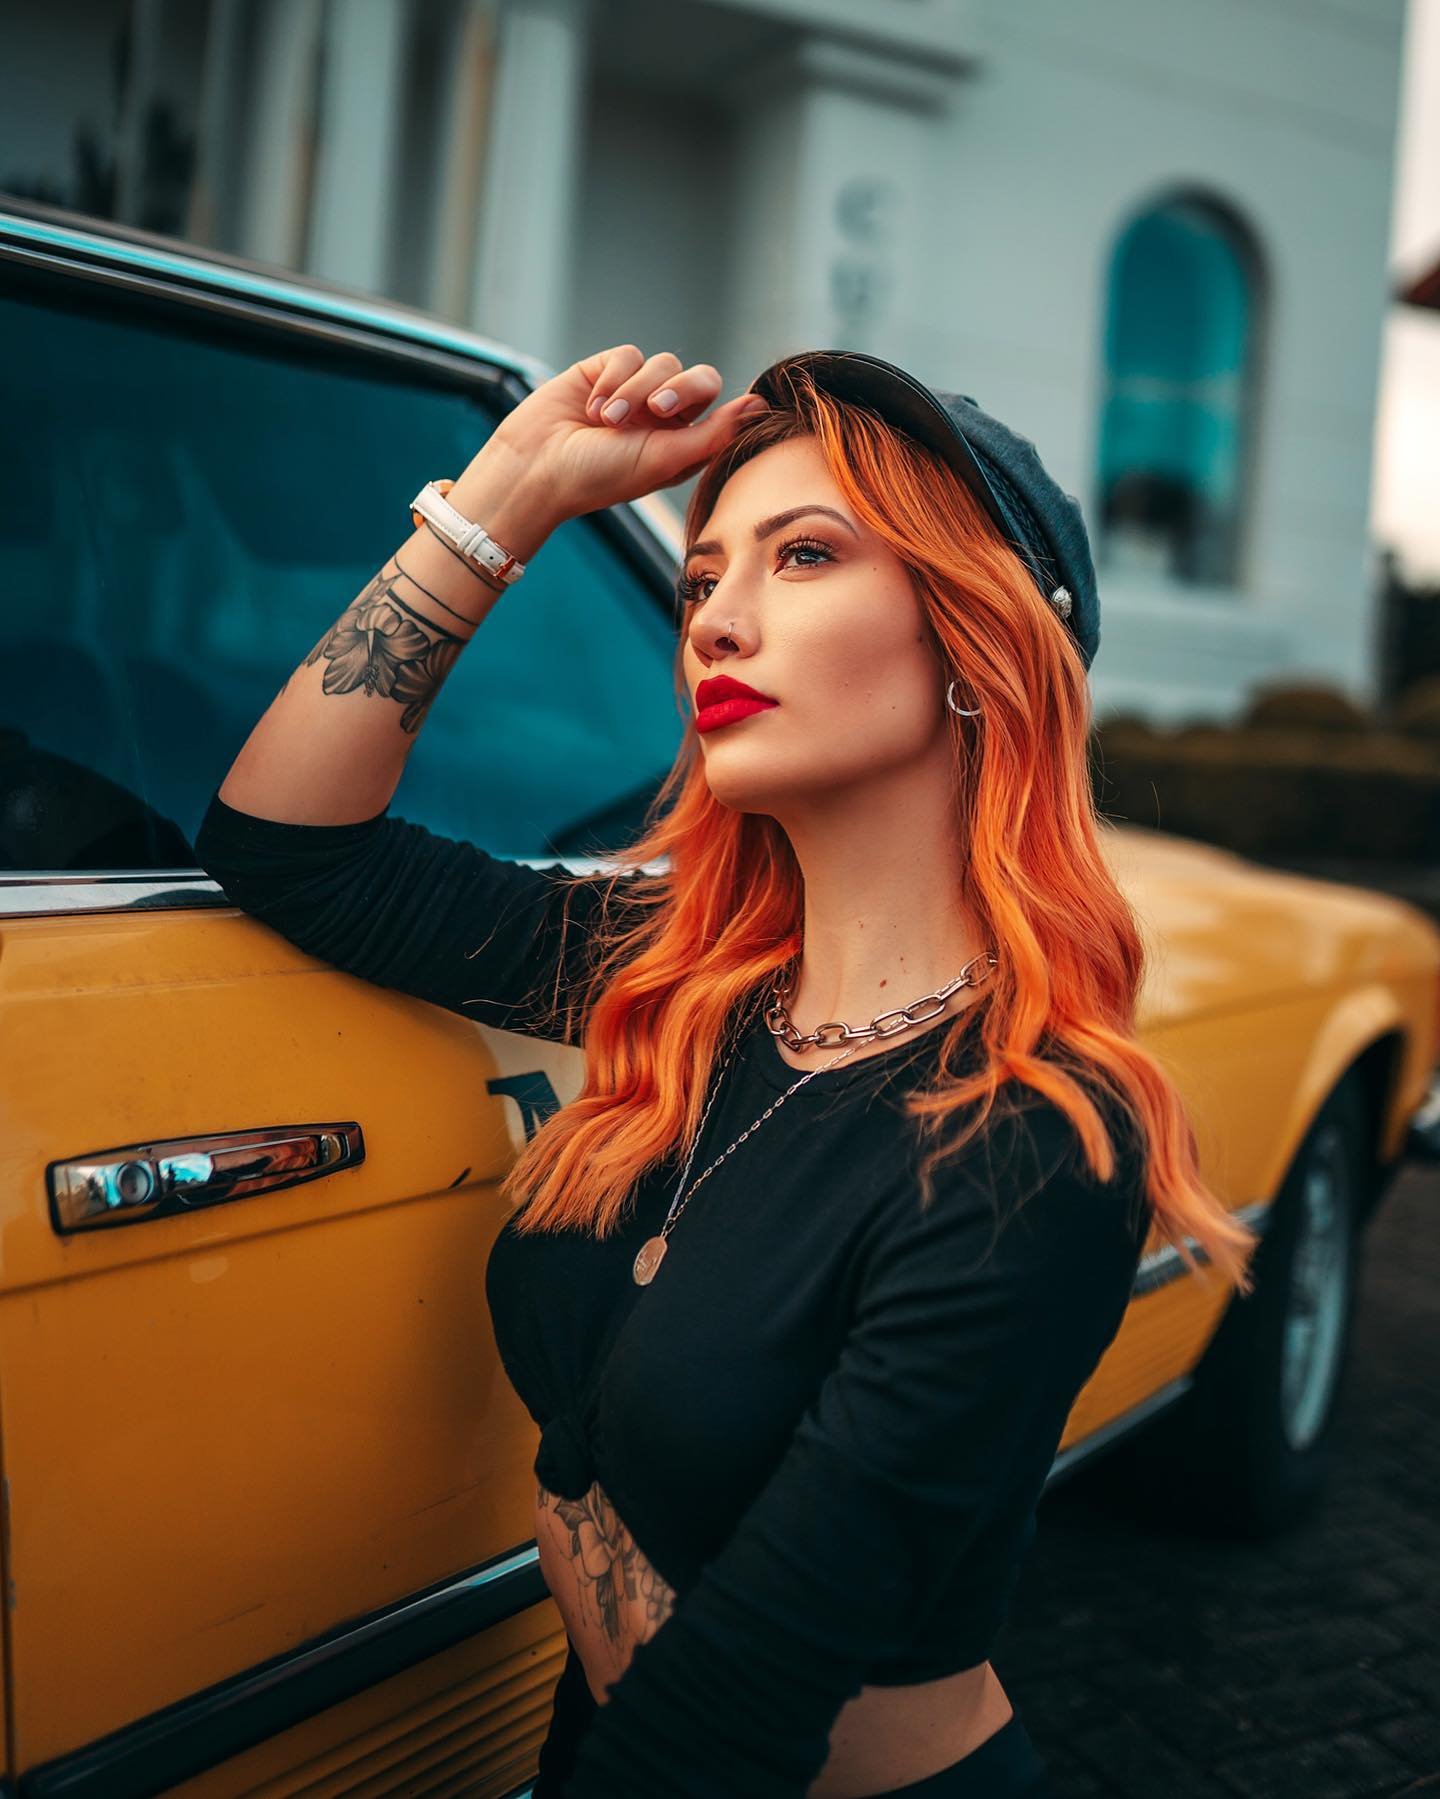 Rafael Ferreira fotografo - Modelo ruiva posando de look preto ao lado de carro amarelo